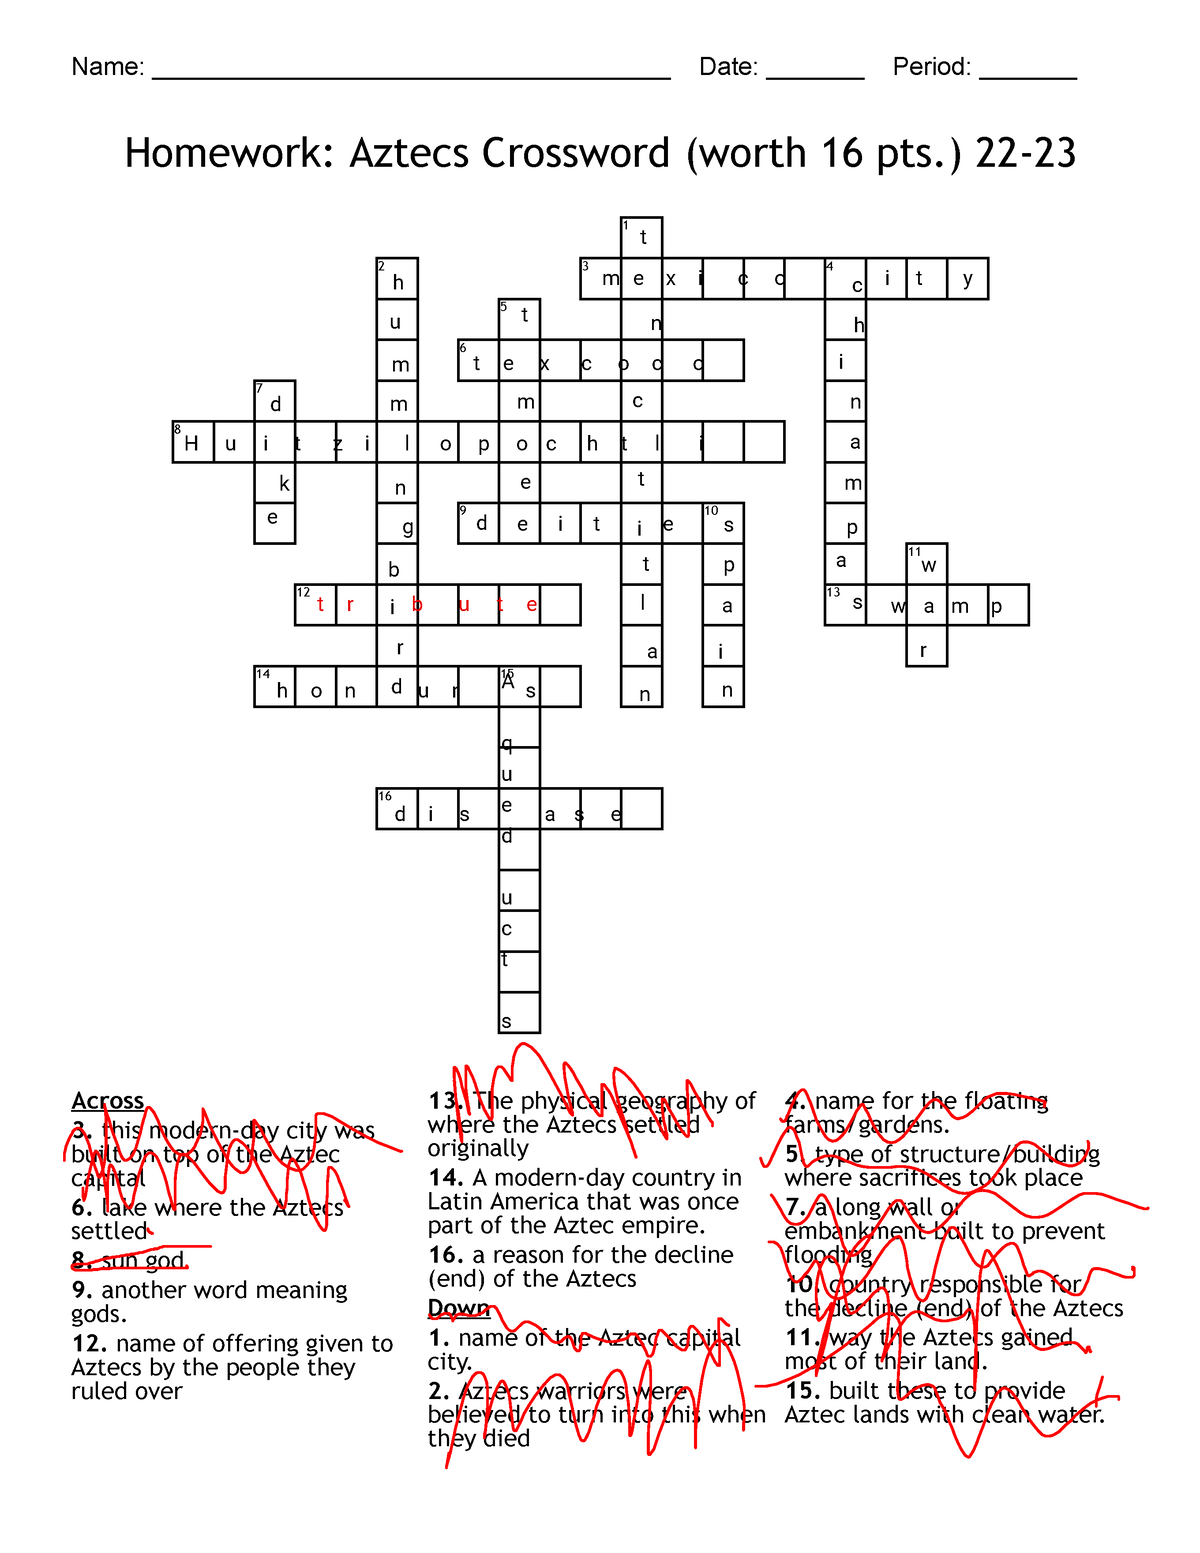 Lewi Sheferaw Homework Aztec Crossword Puzzle 22 23 Name